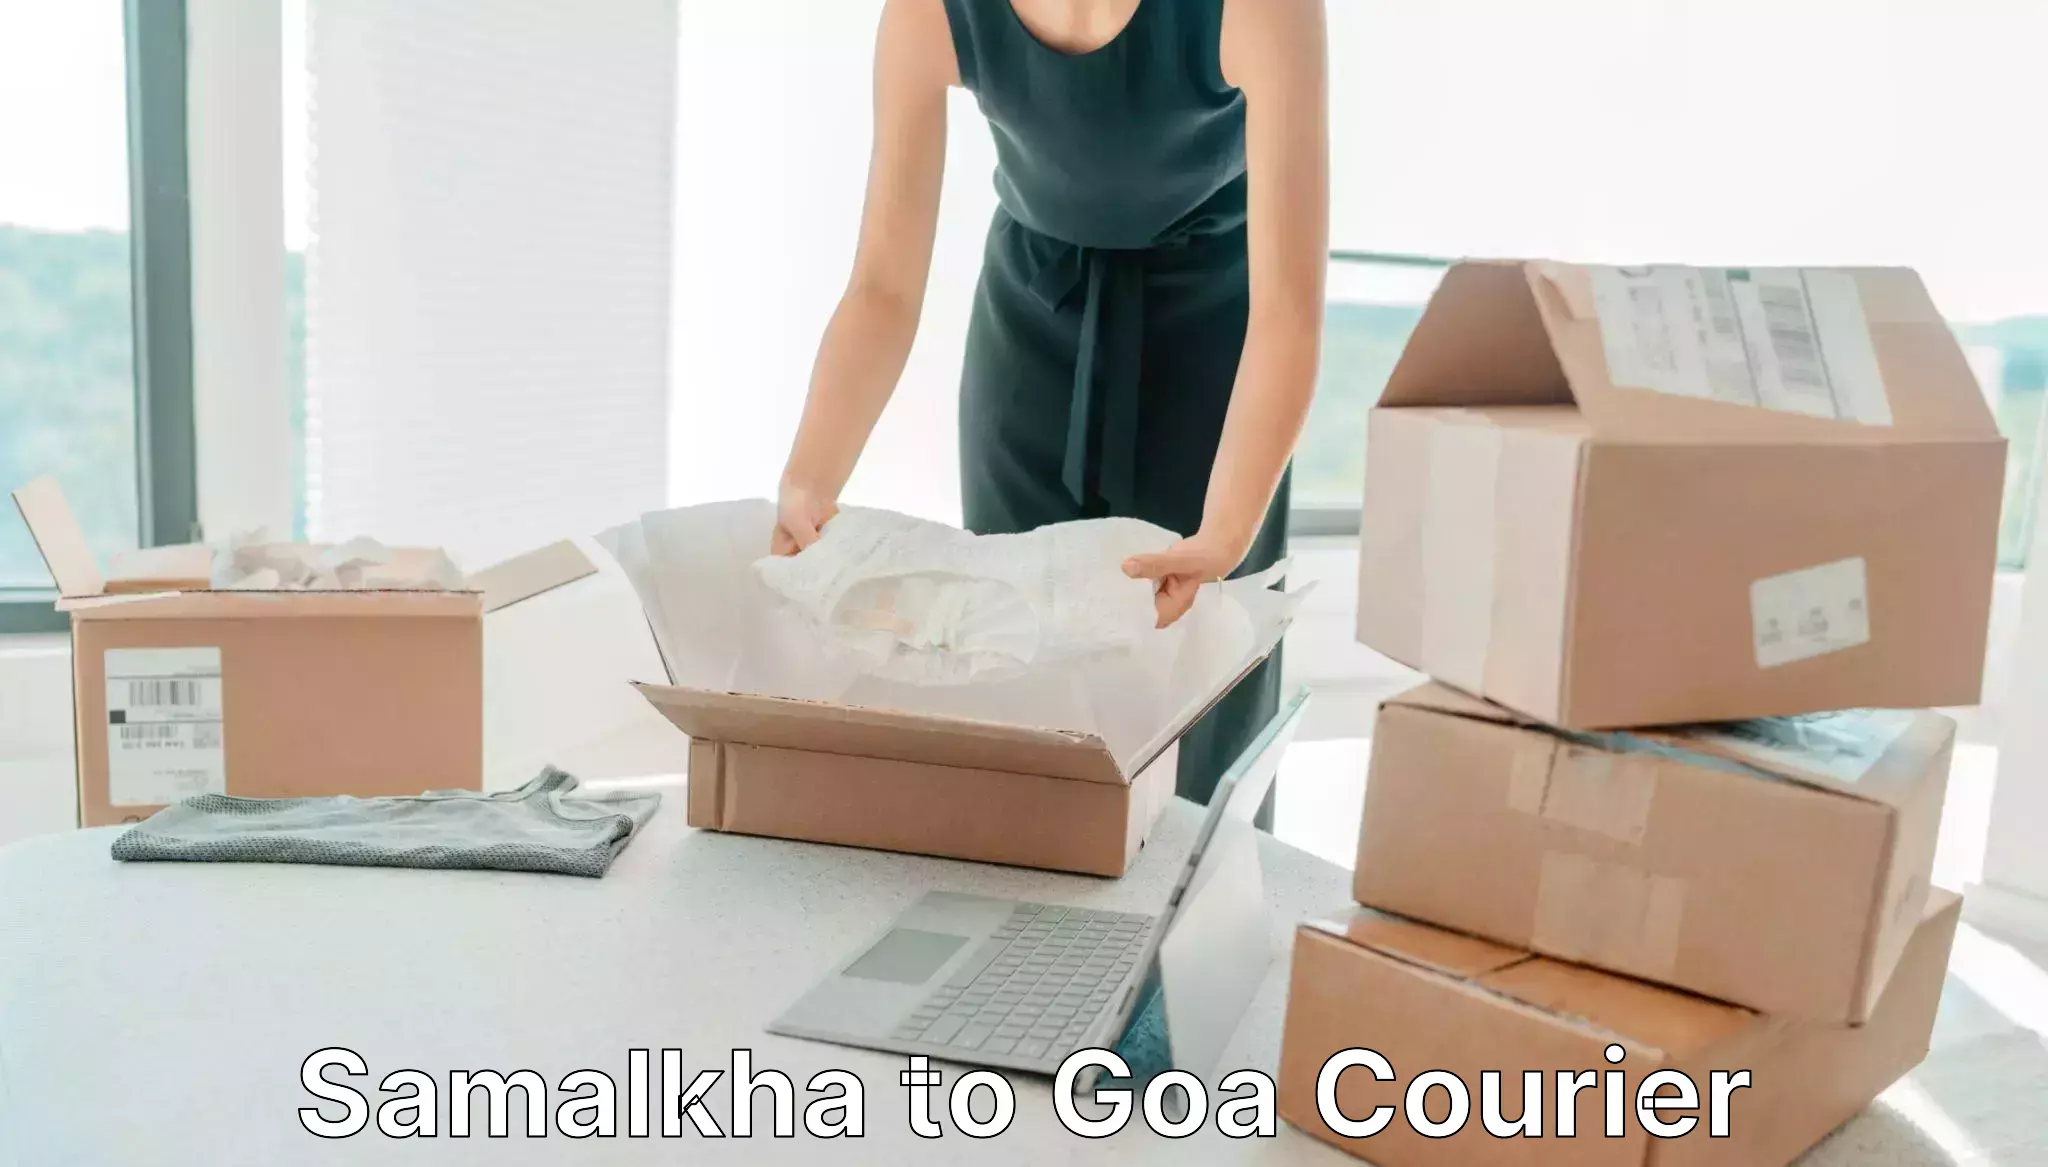 User-friendly delivery service Samalkha to Goa